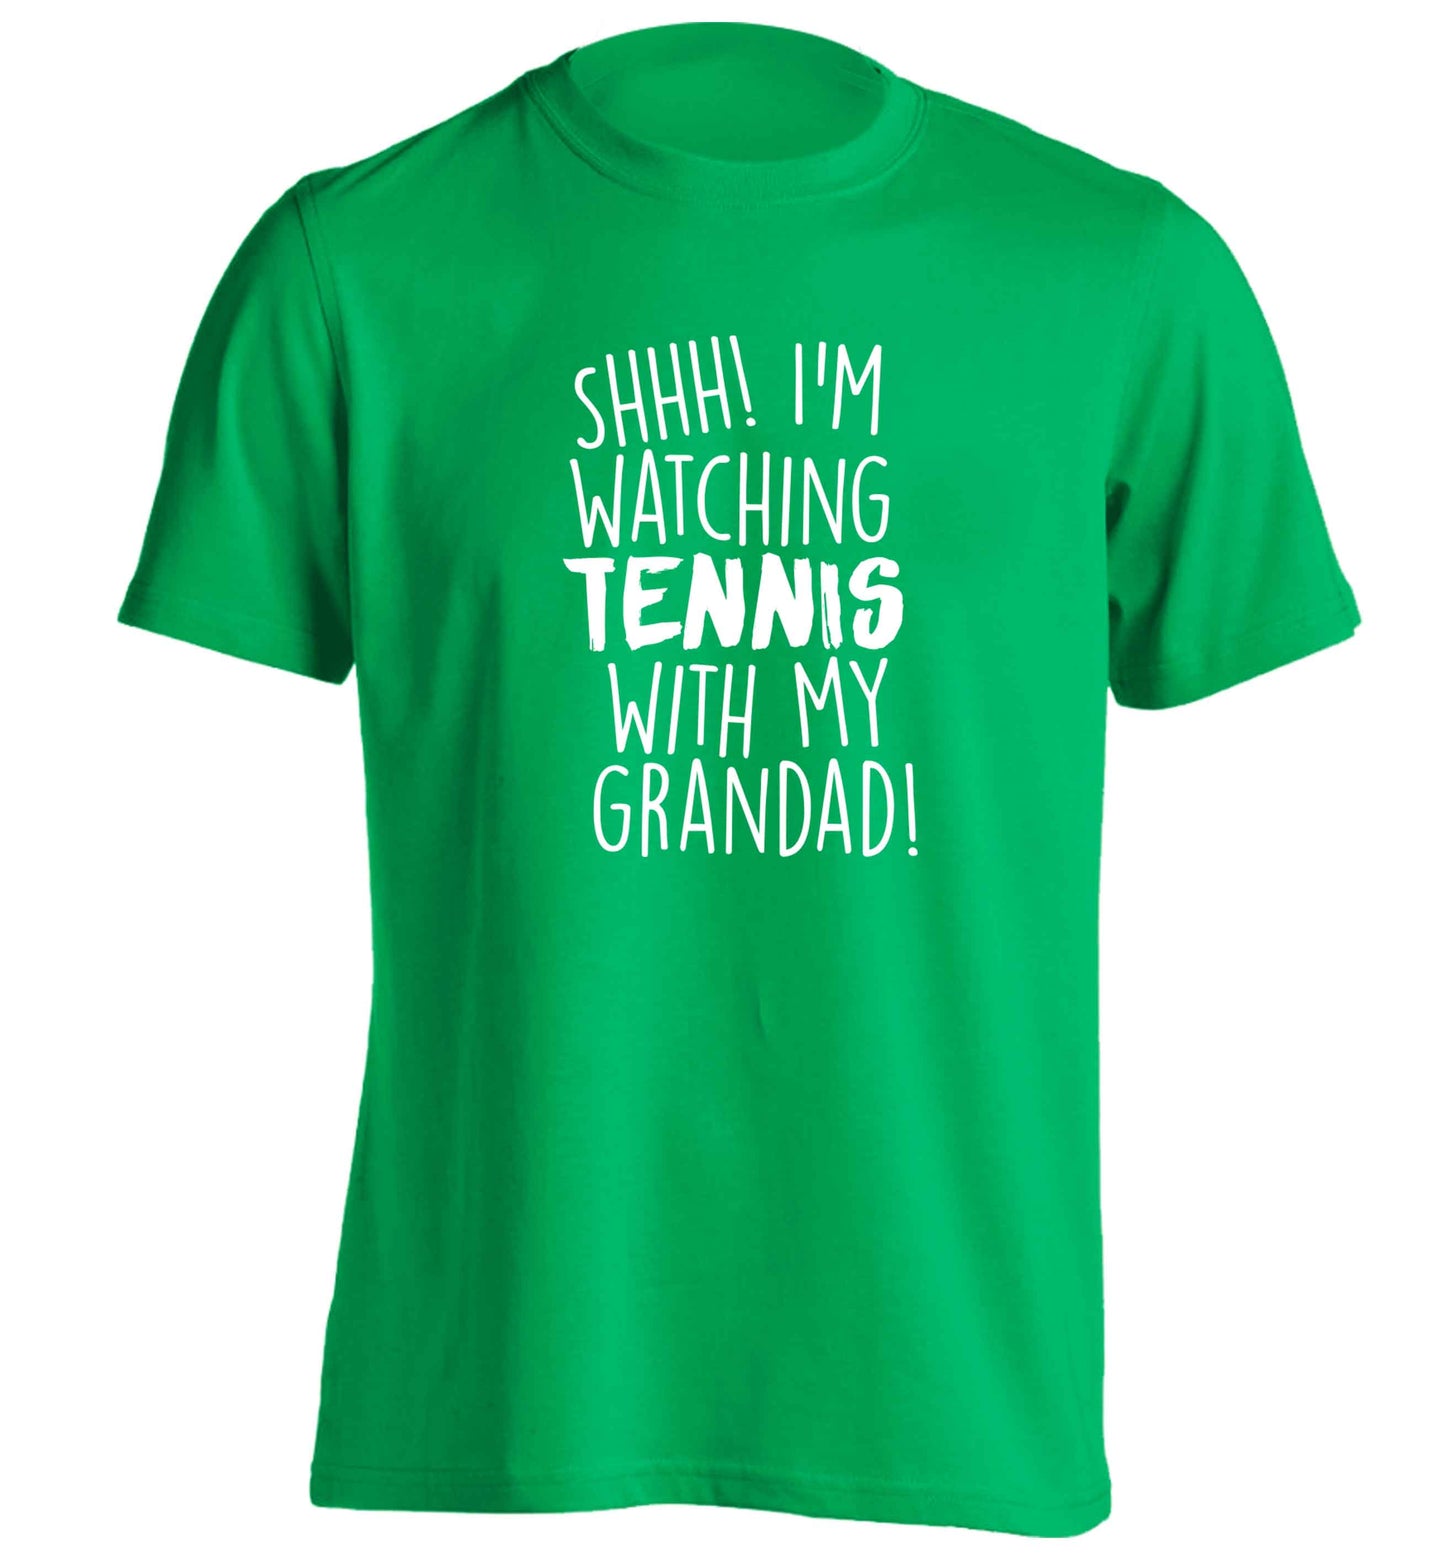 Shh! I'm watching tennis with my grandad! adults unisex green Tshirt 2XL